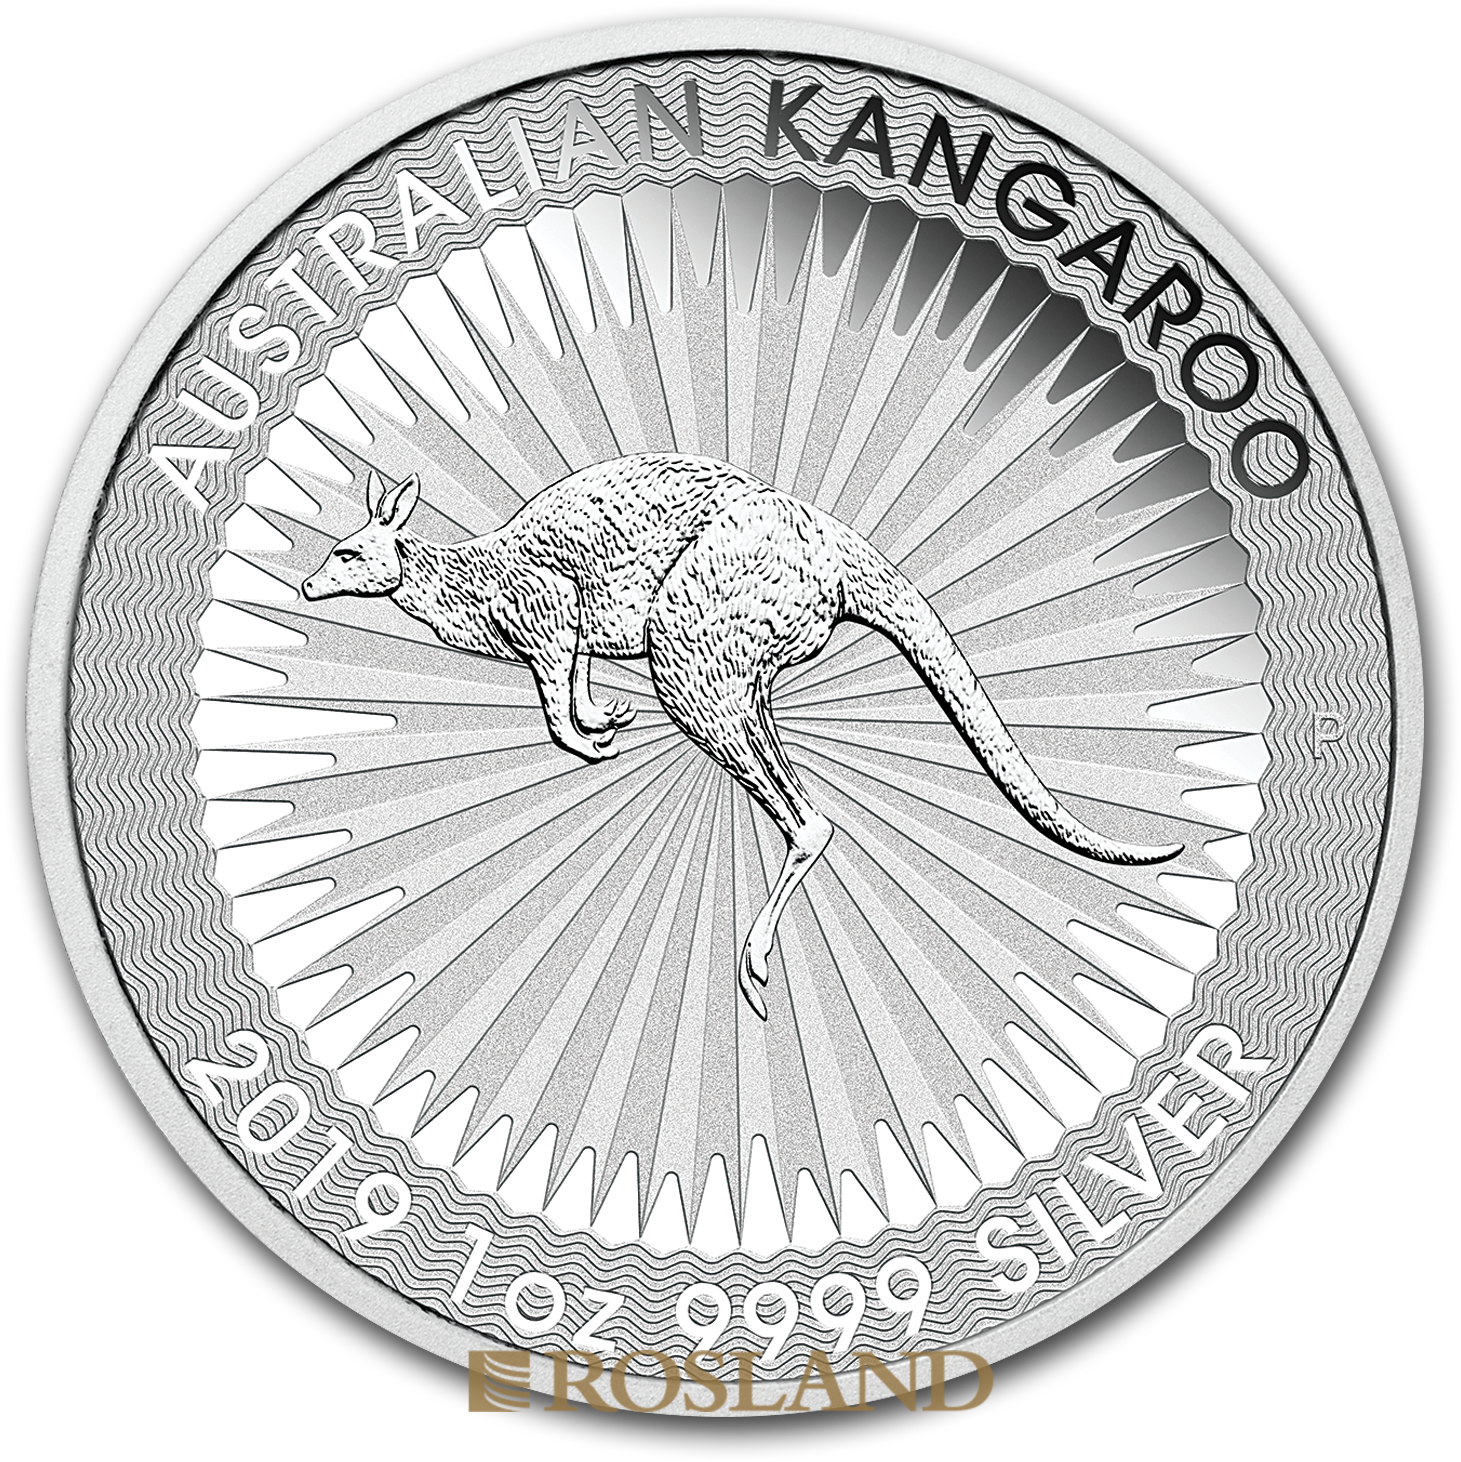 1 Unze Silbermünze Känguru 2019